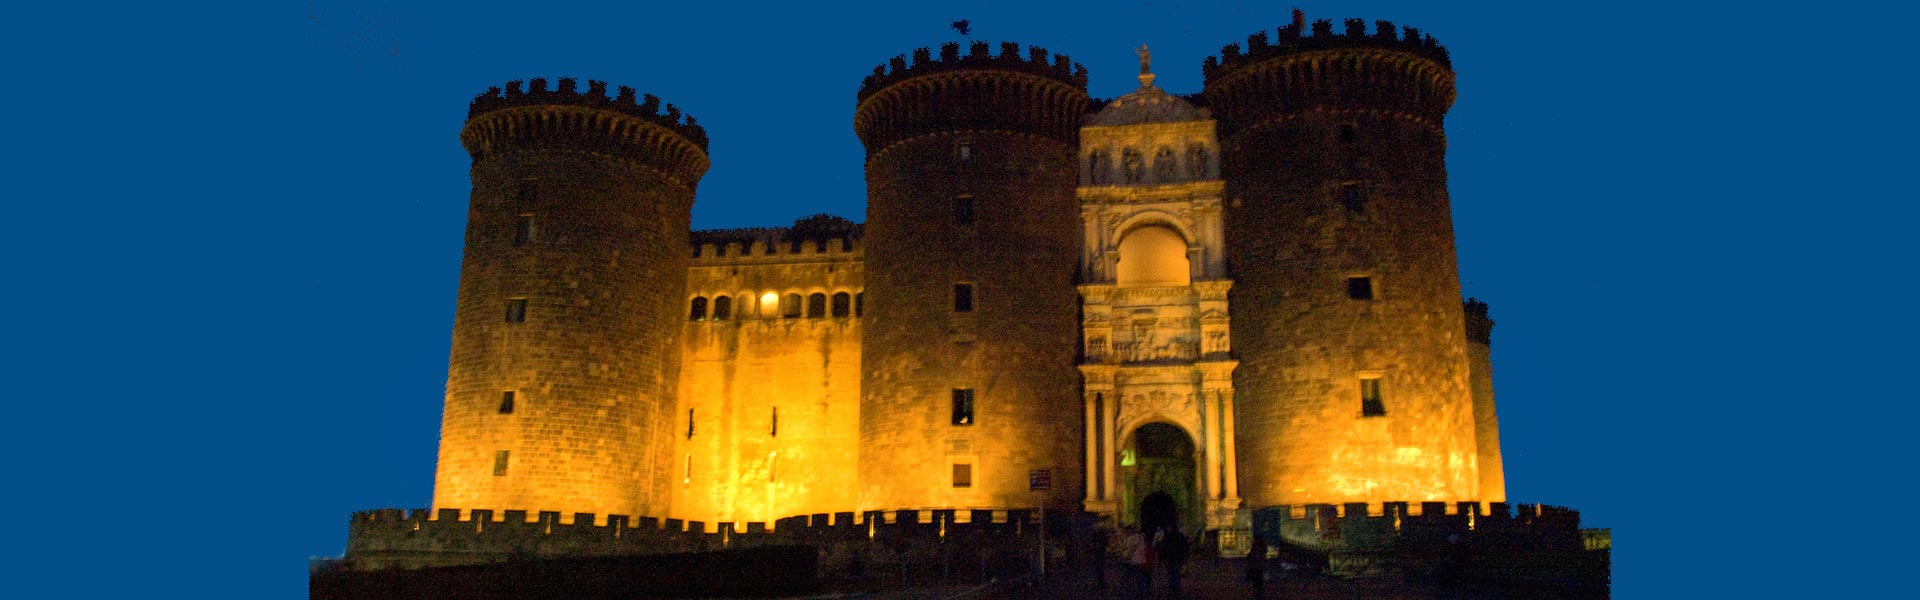 Maschio-Angioino-Castel-Nuovo